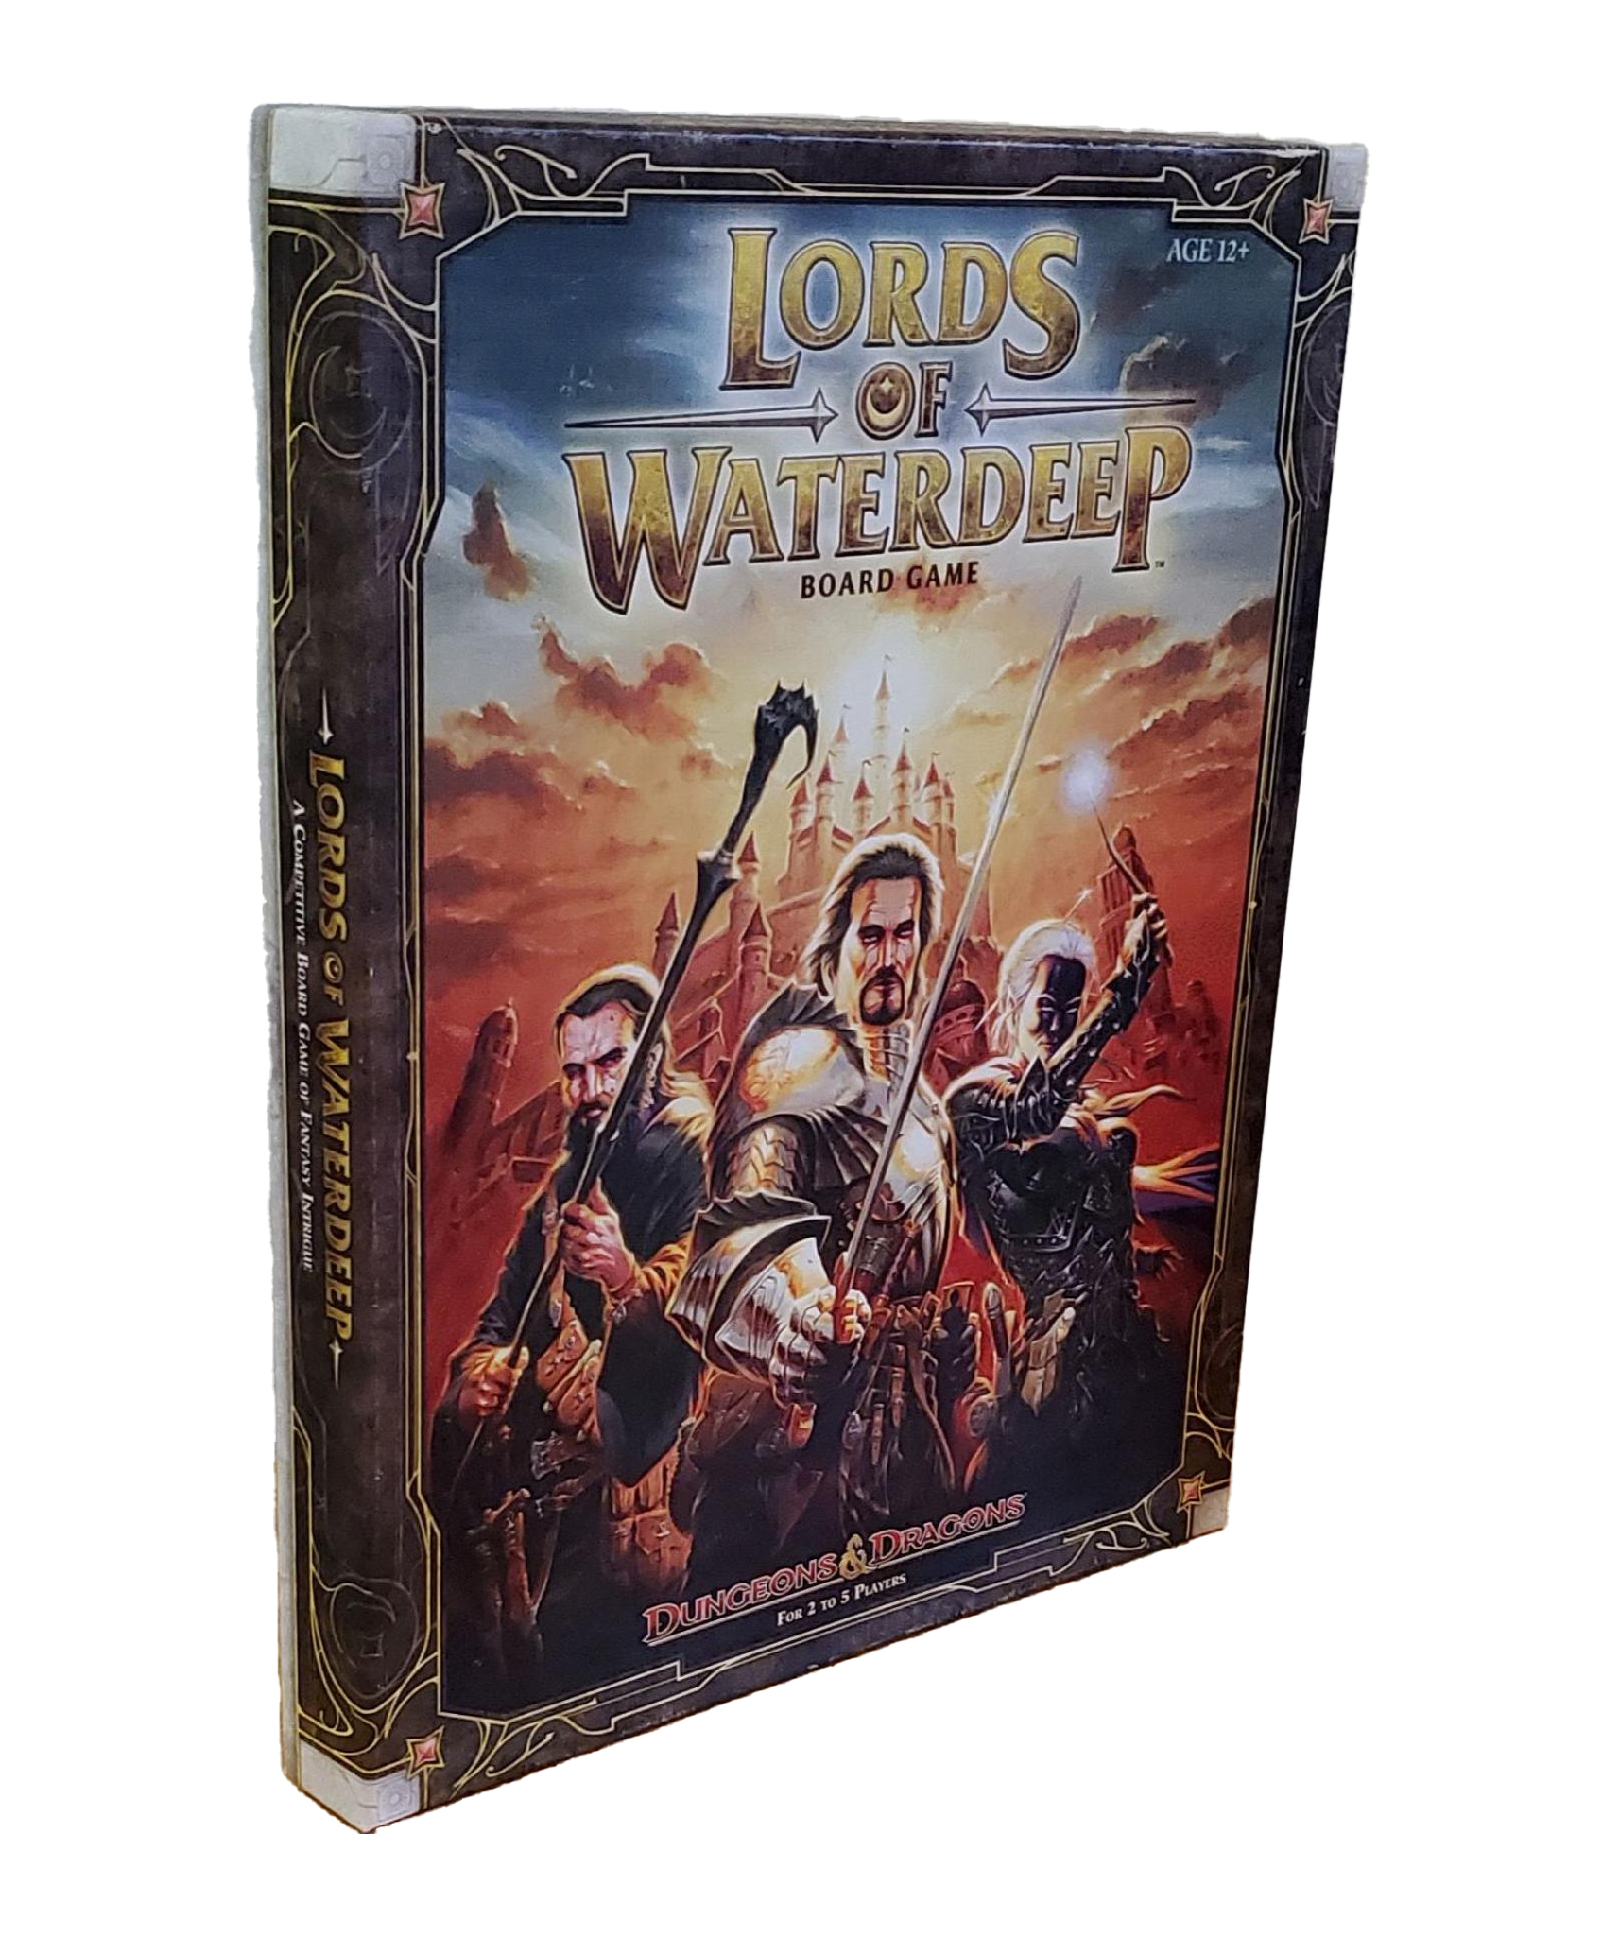 Lords of Waterdeep board game by Hasbro